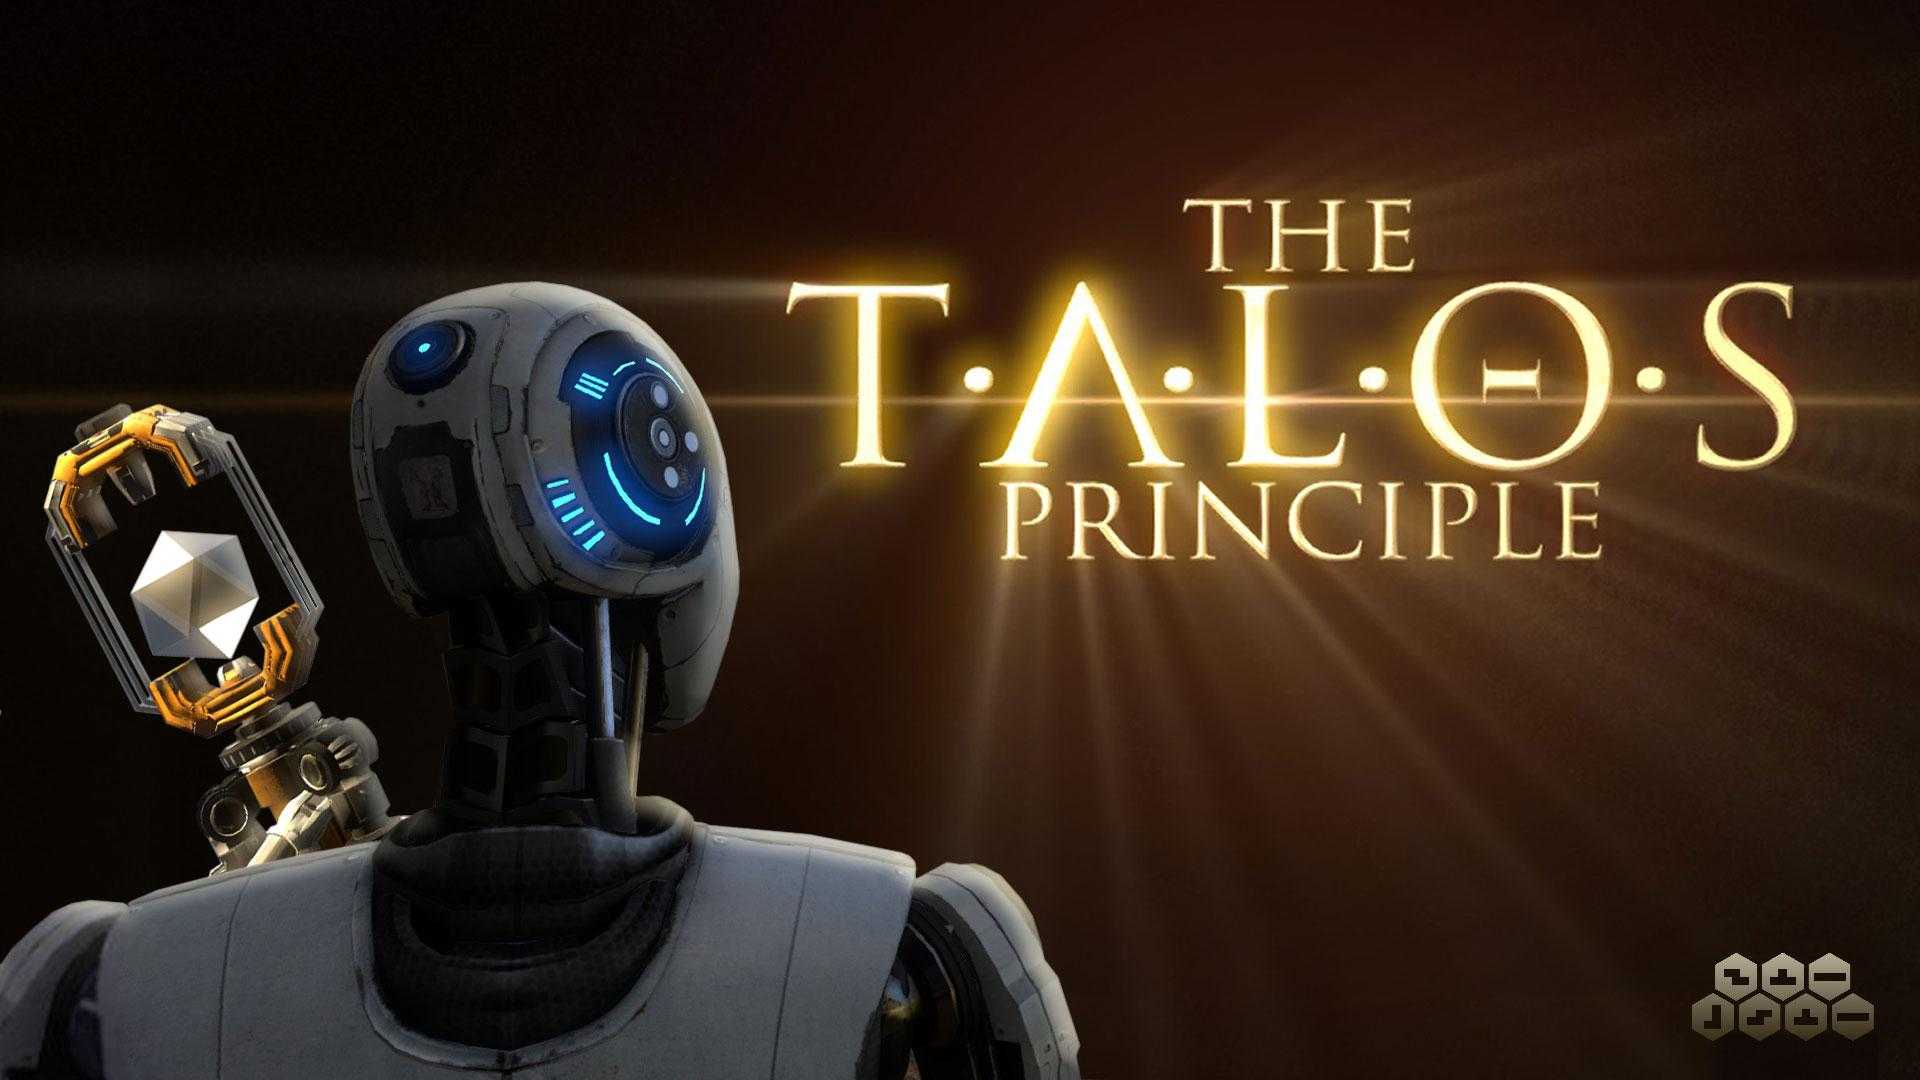 talos principle 2 trailer